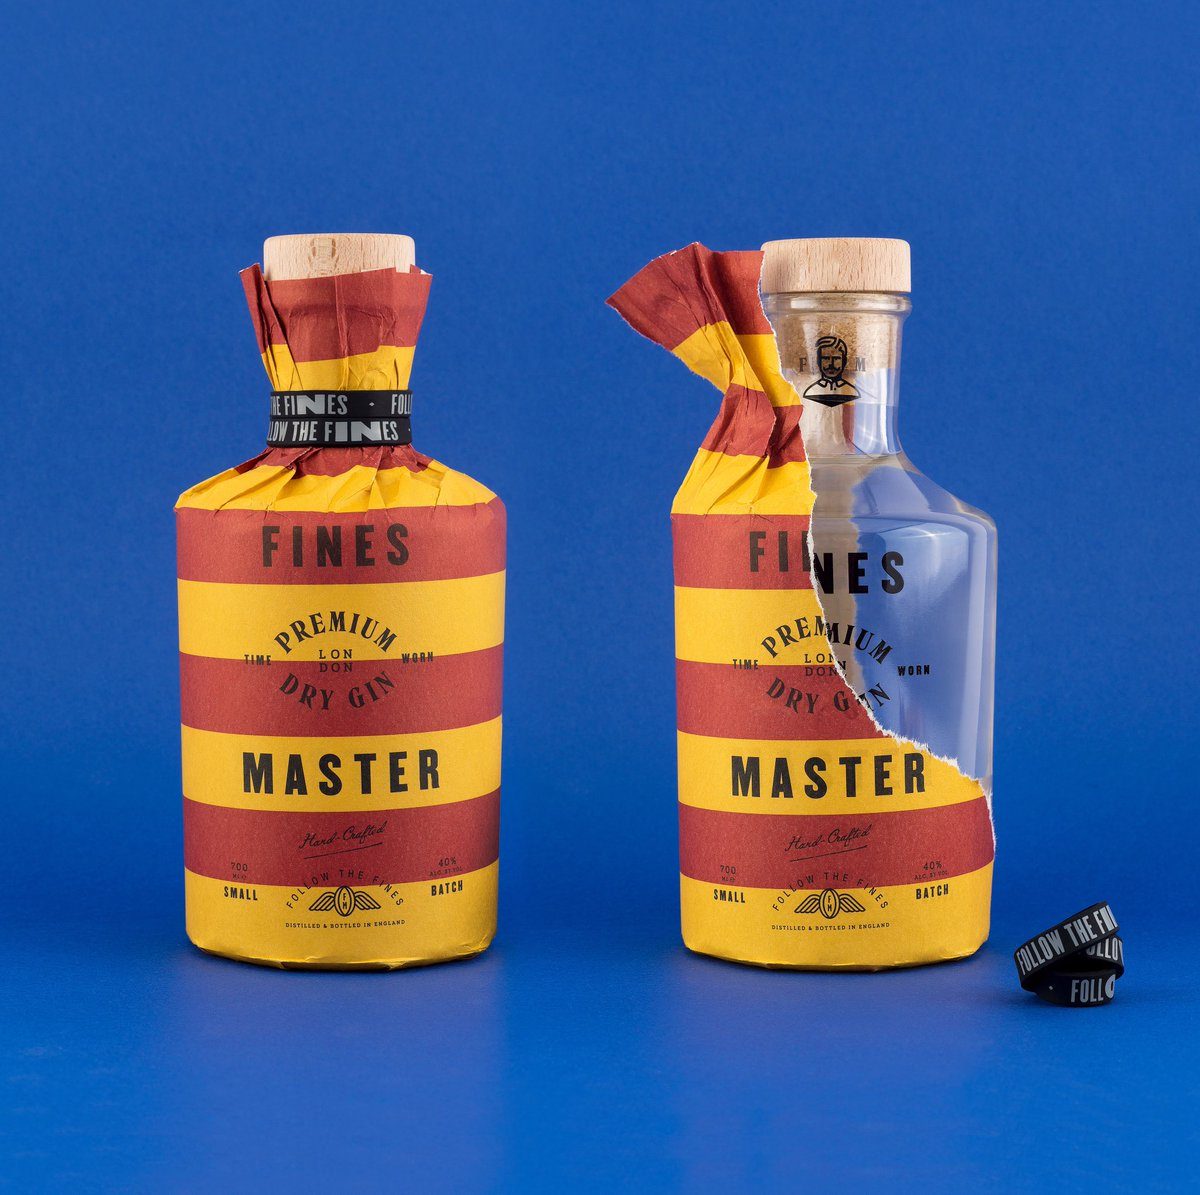 Fines master bottles